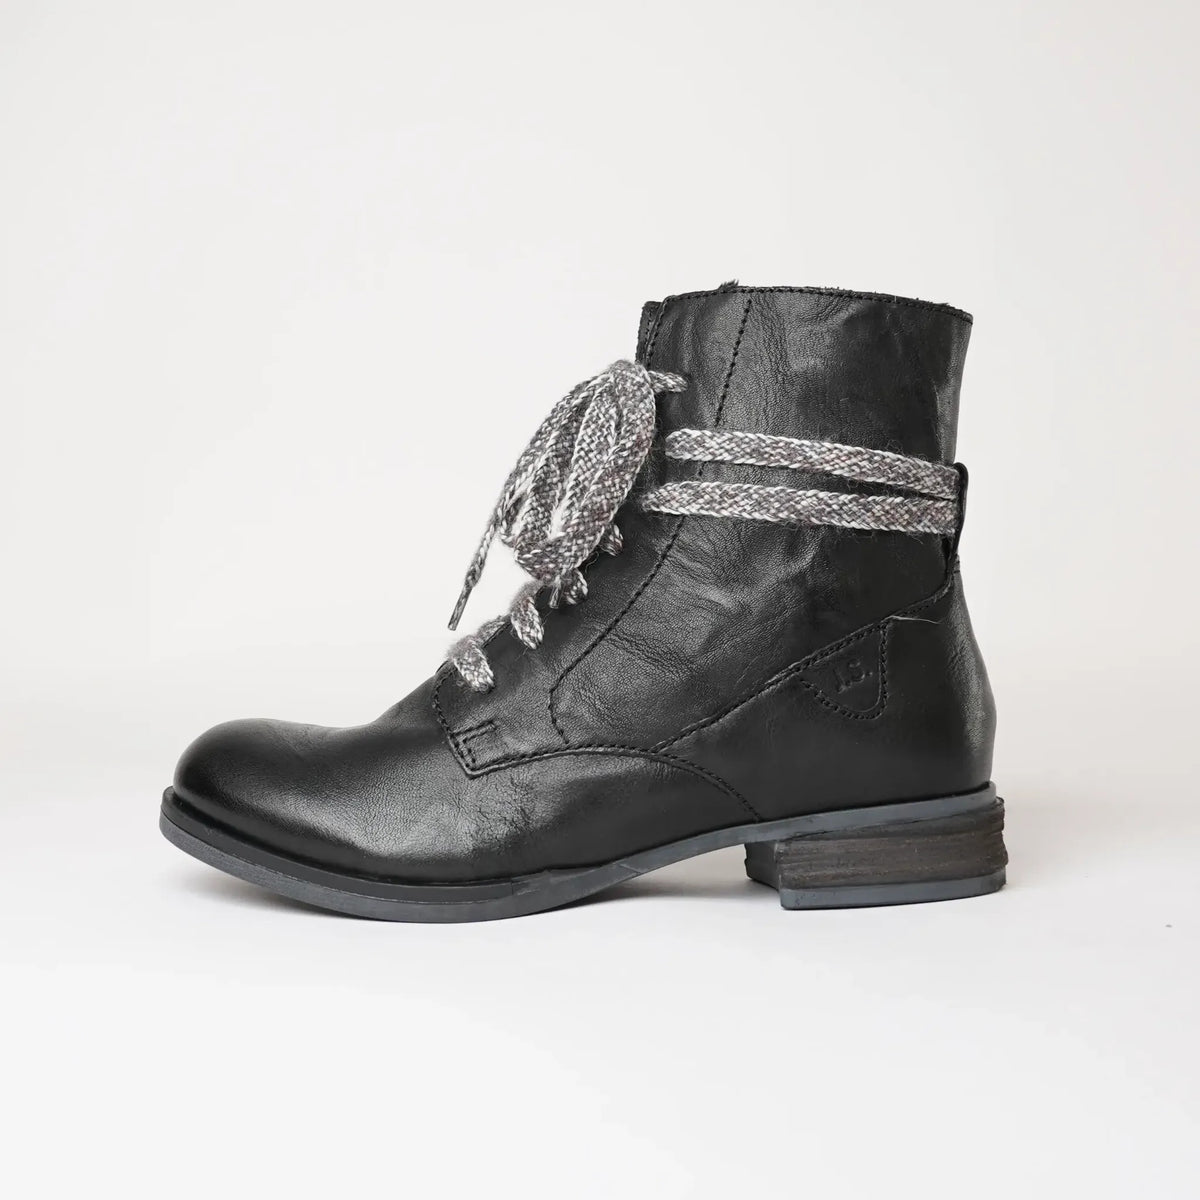 Sanja 18 Black Leather Ankle Boots